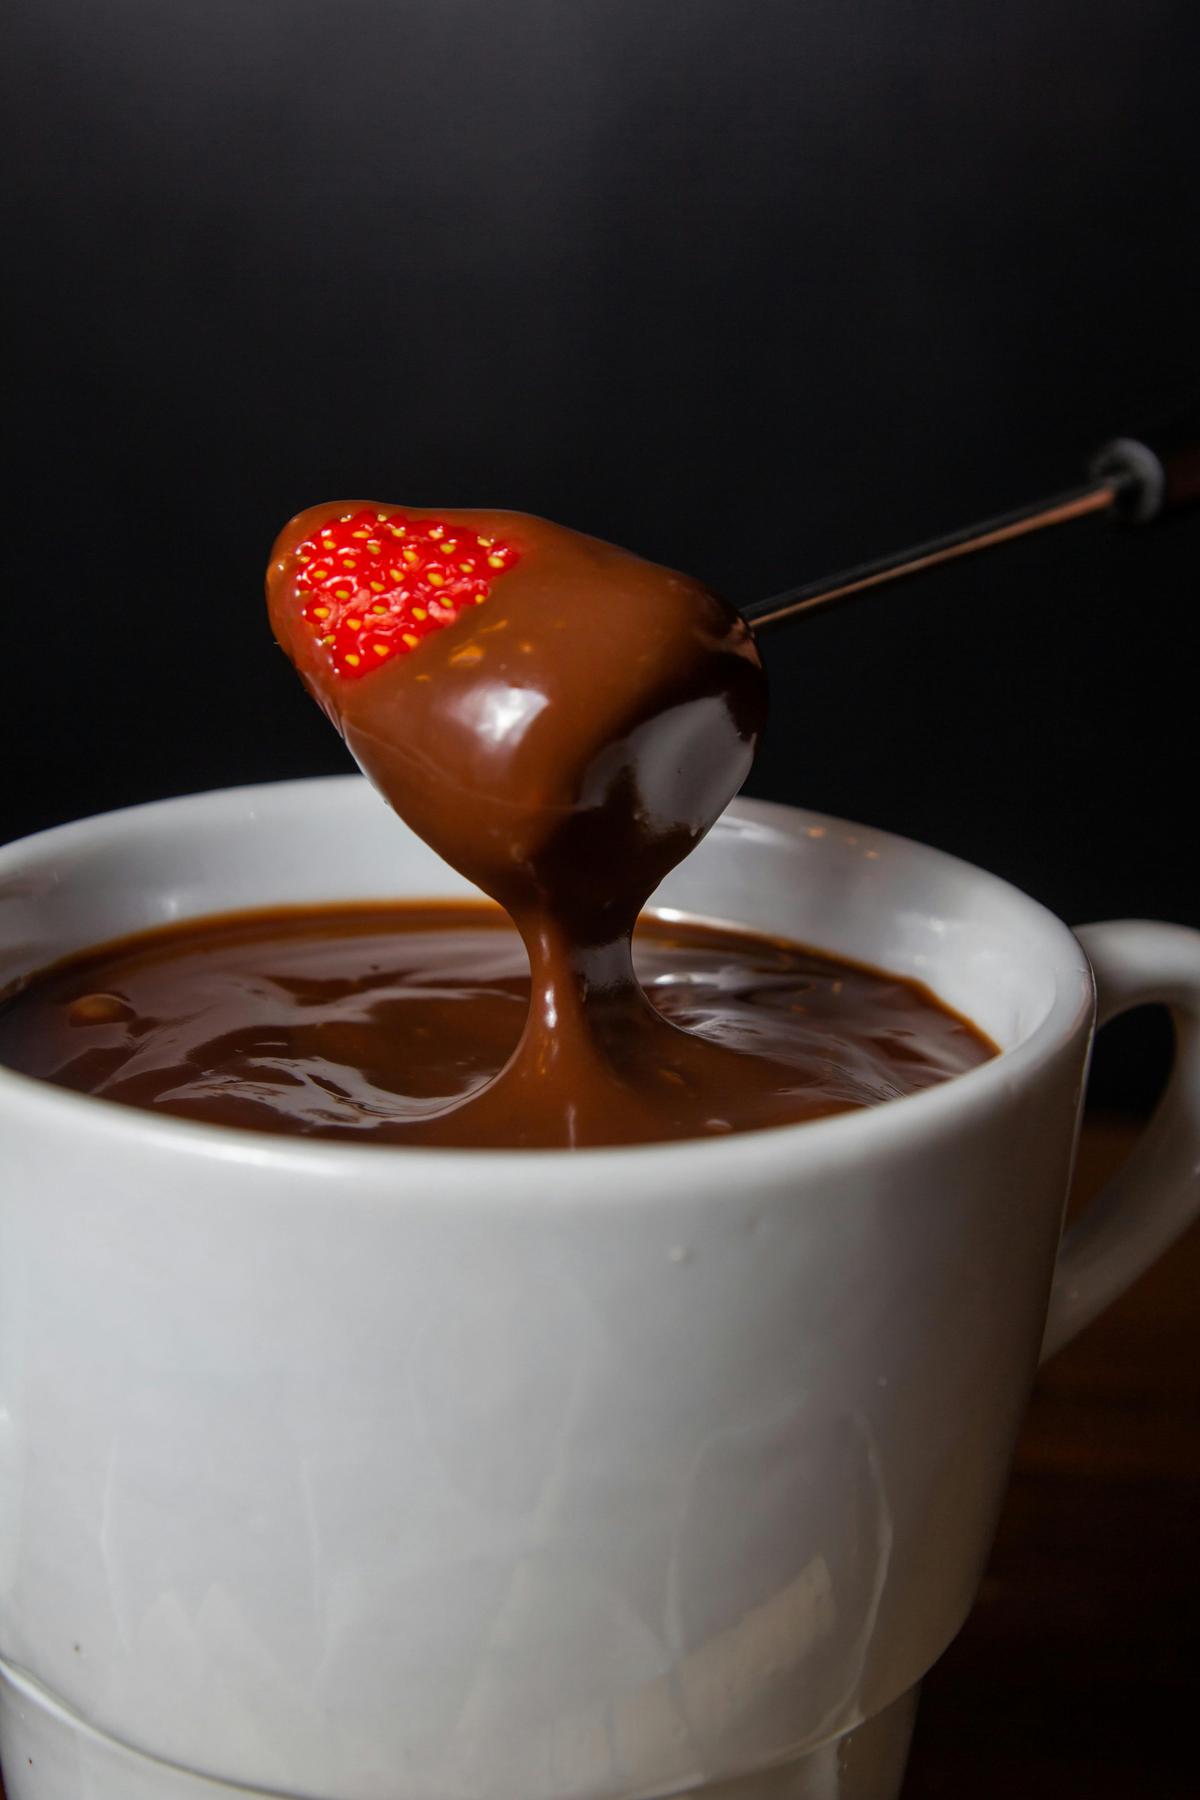 Fondue de chocolate | La receta favorita de Leonardo DiCaprio
(Fuente: Pexels)